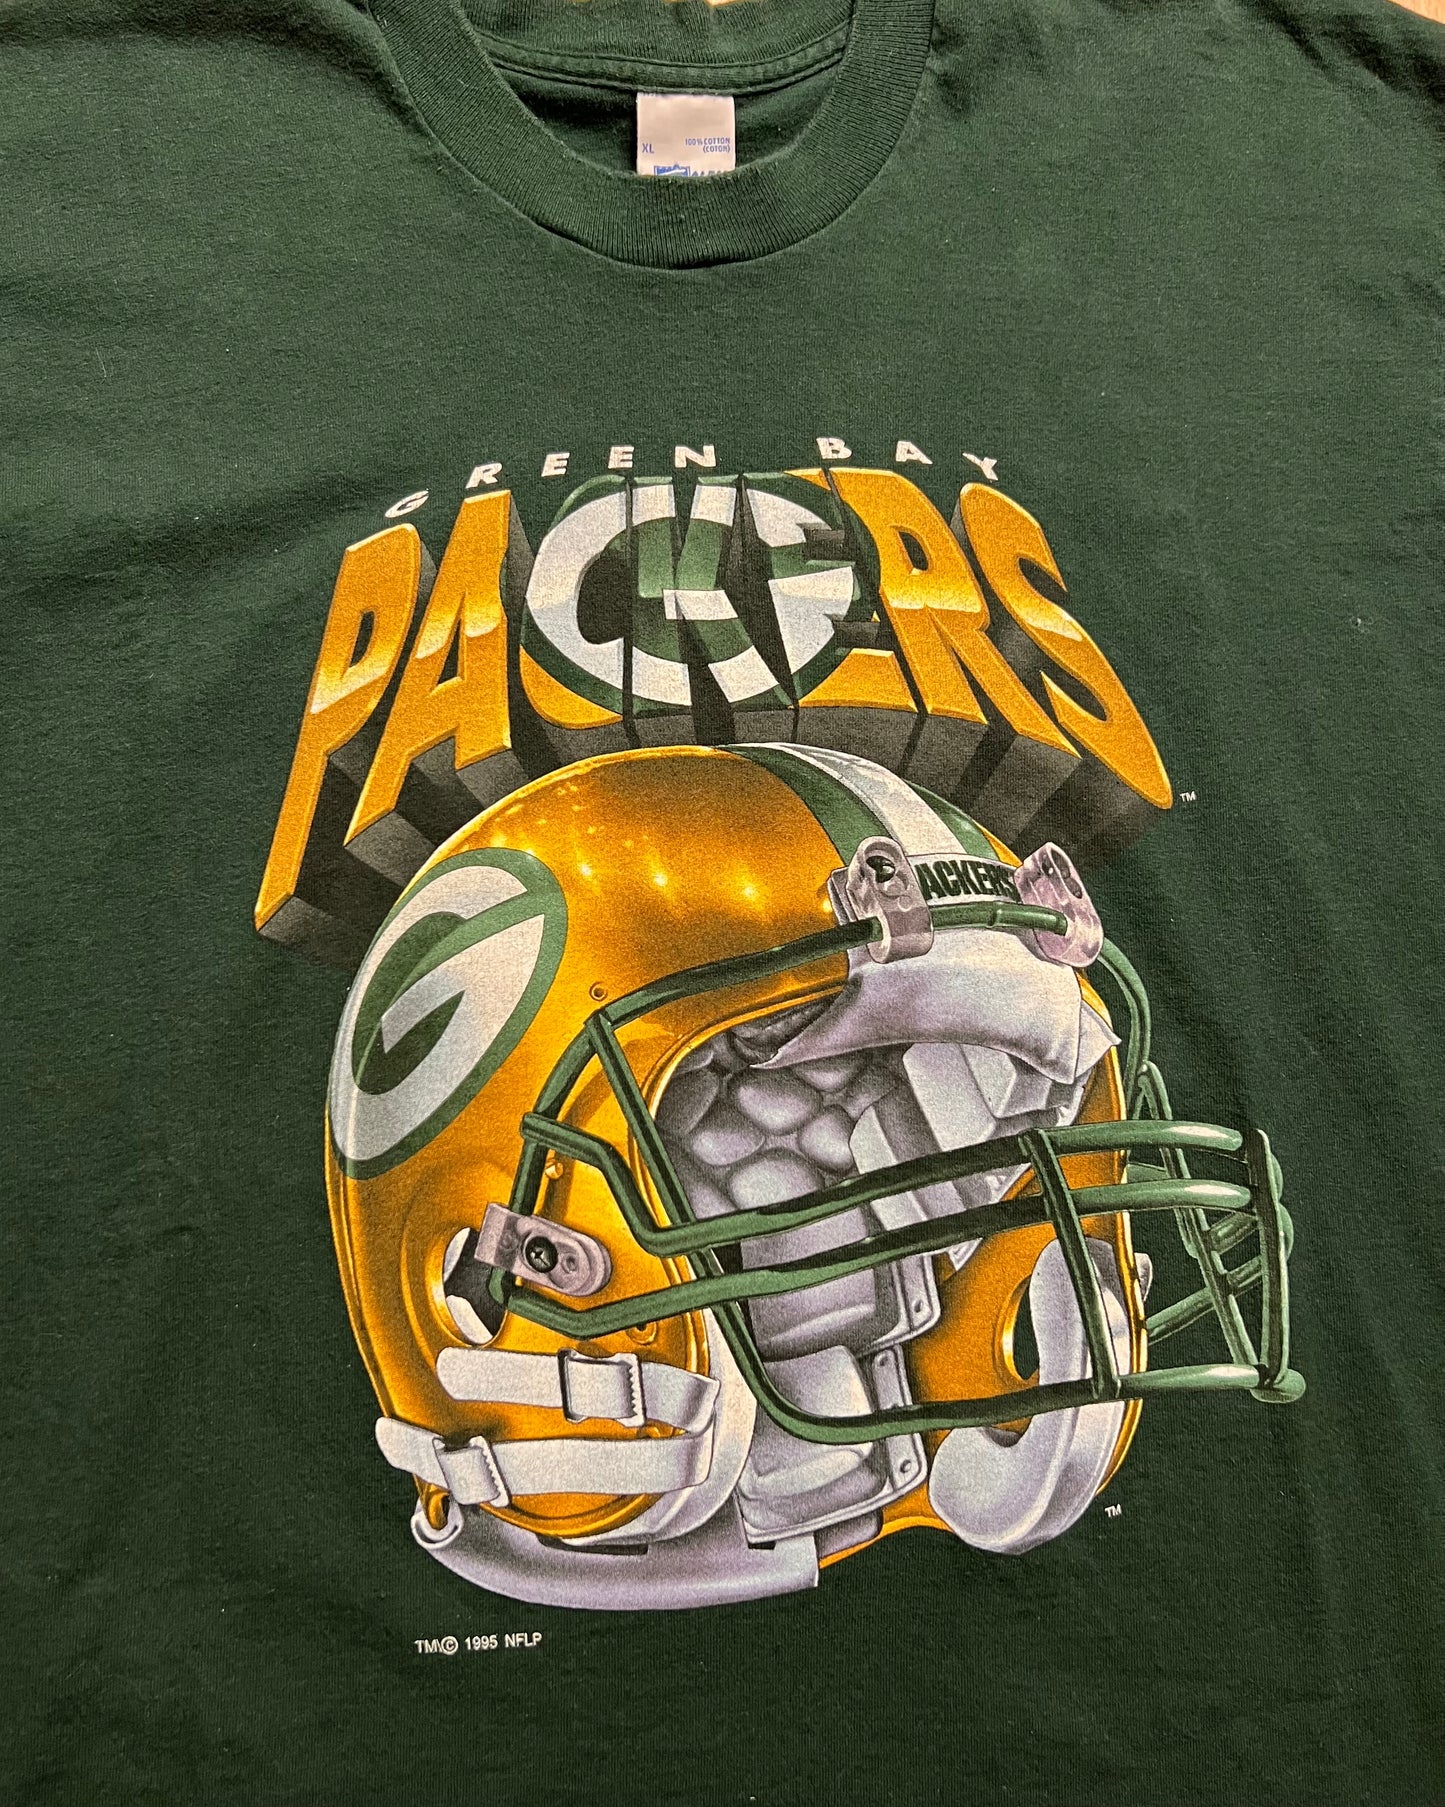 1995 Green Bay Packers Single Stitch Salem T-Shirt